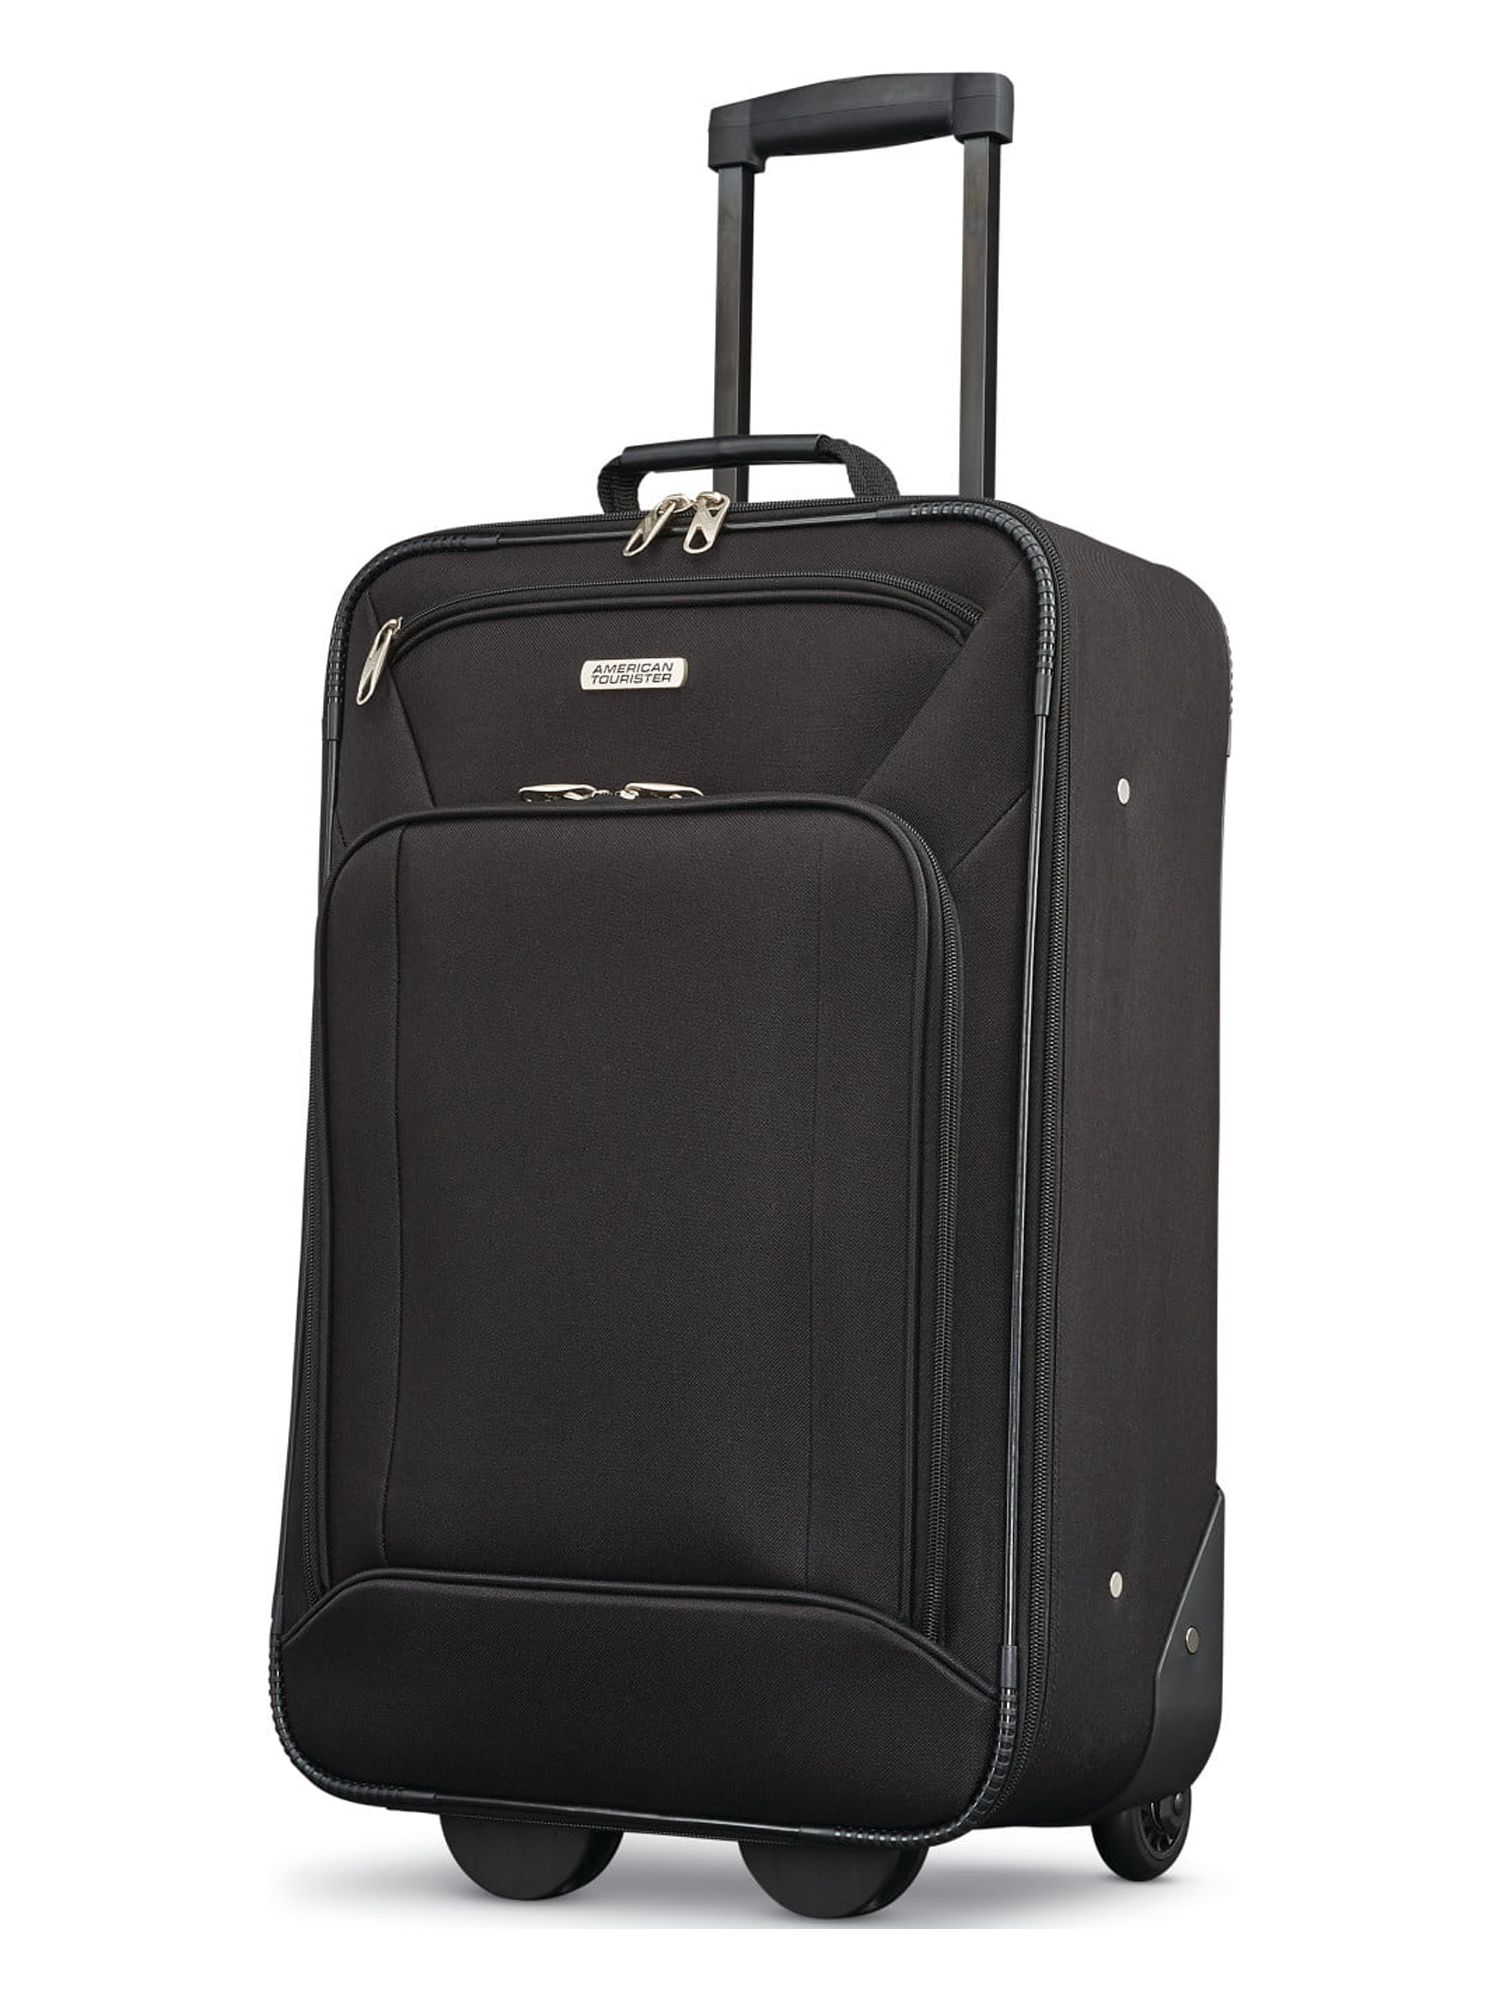 American Tourister Fieldbrook XLT 4 Piece Softside Luggage Set - image 2 of 5